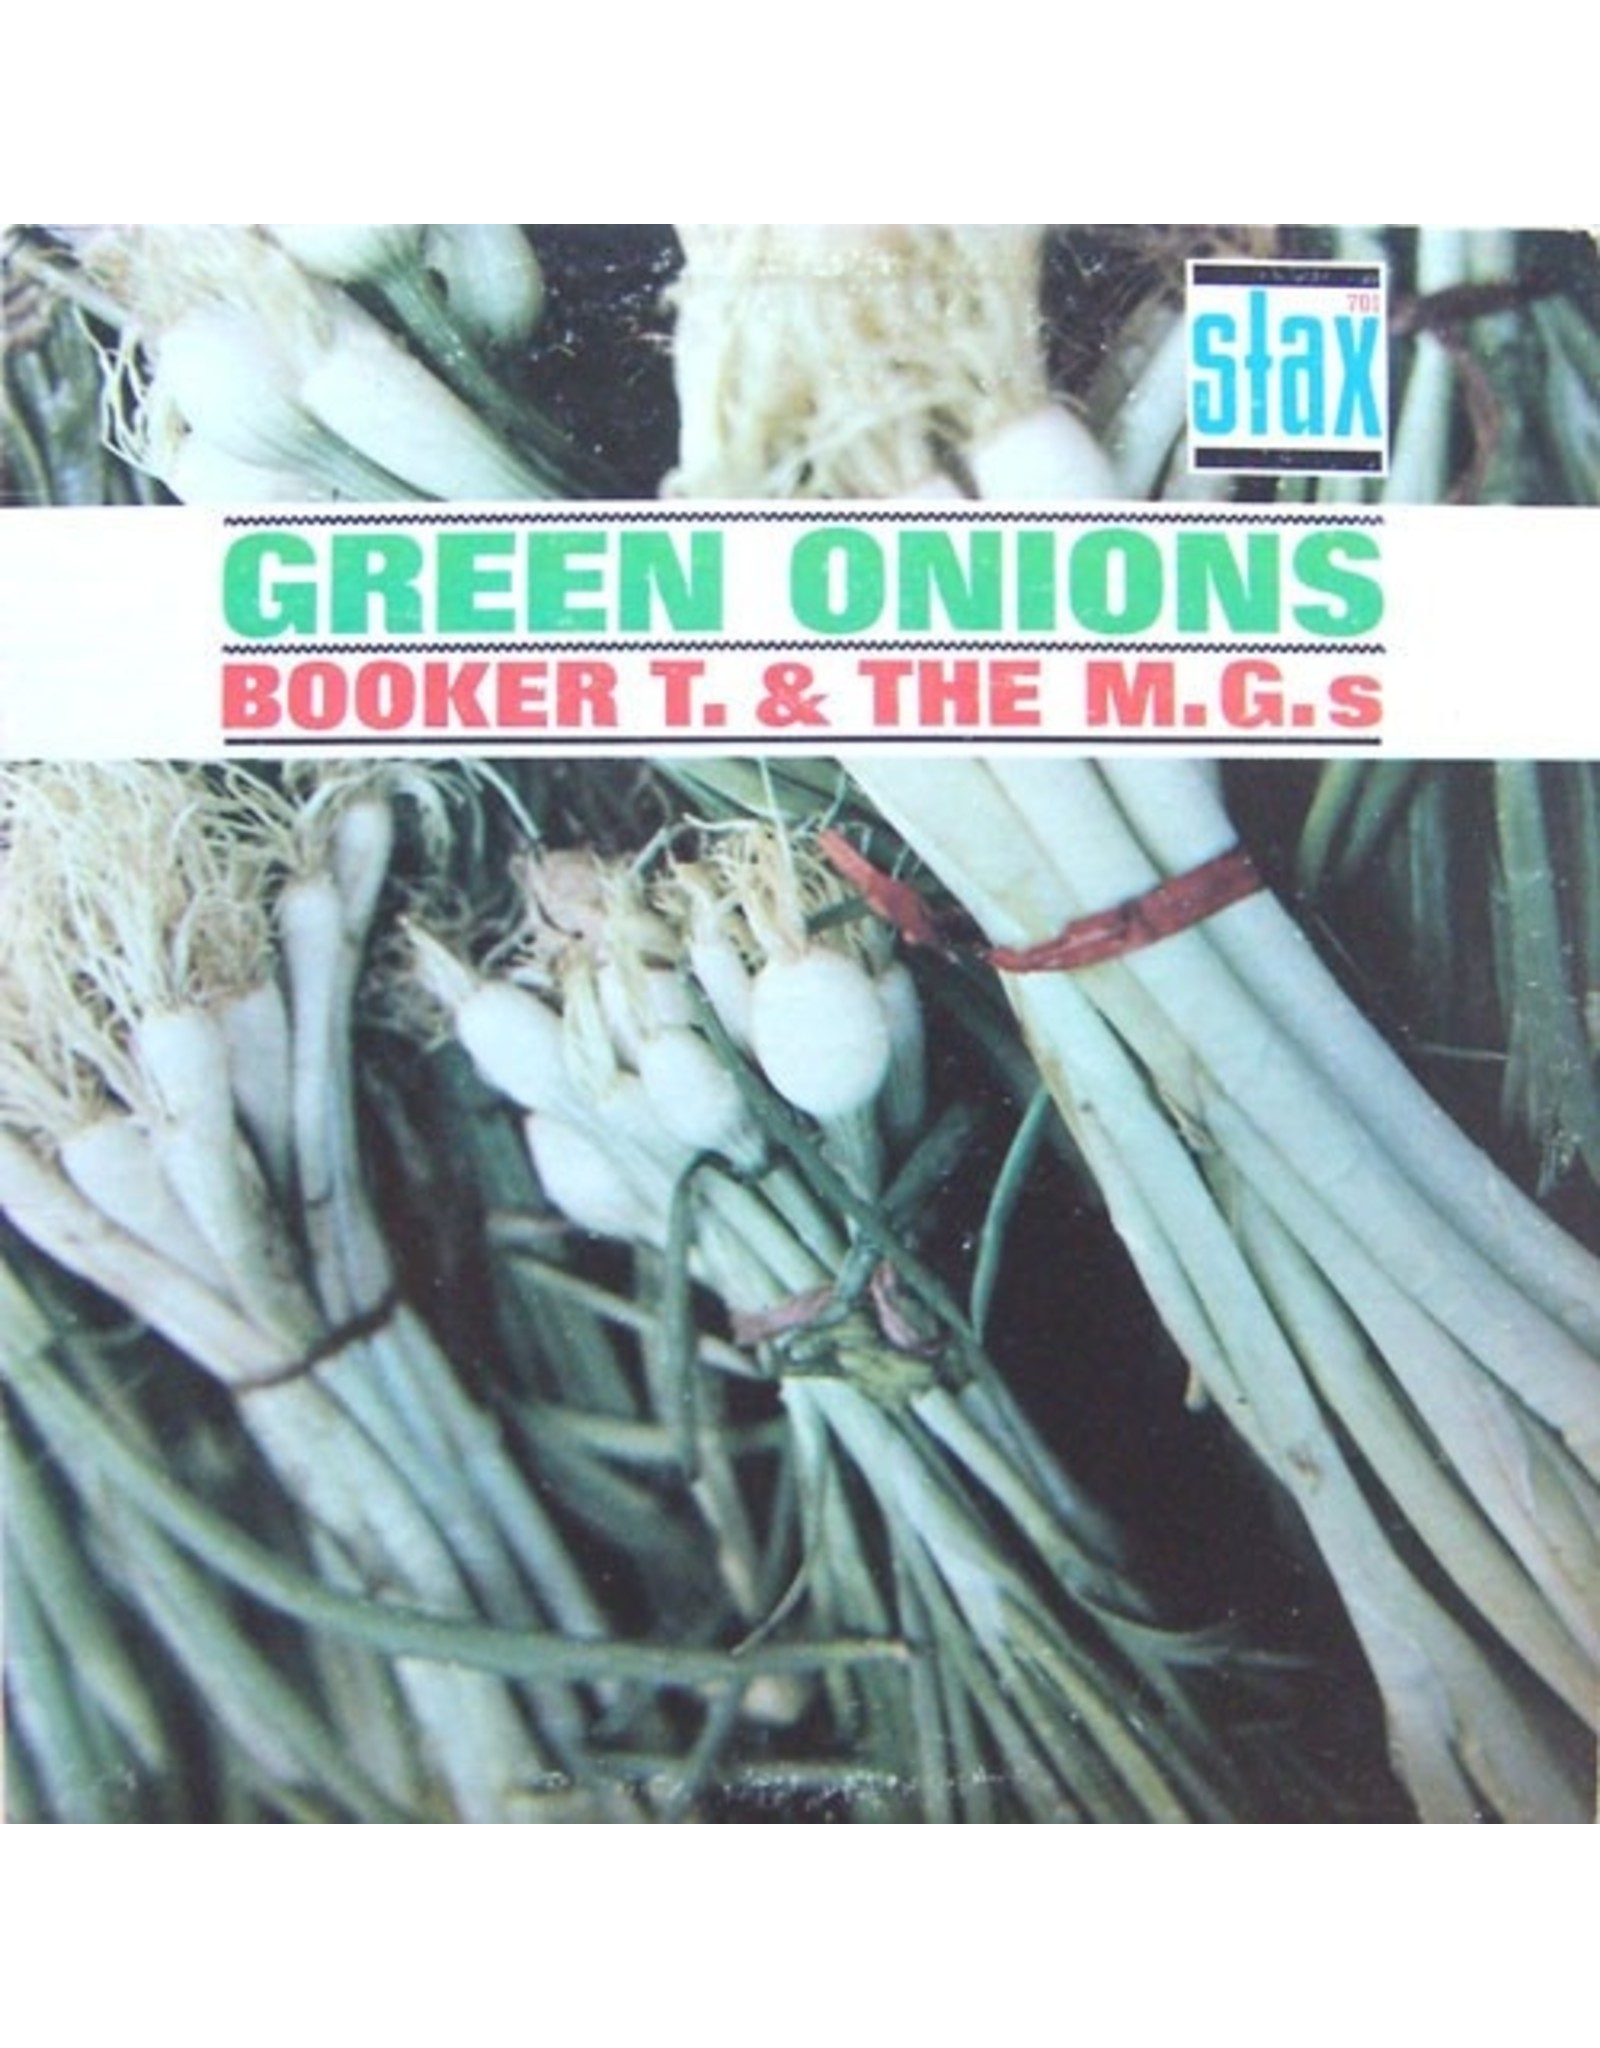 New Vinyl Booker T. & The M.G.s - Green Onions LP